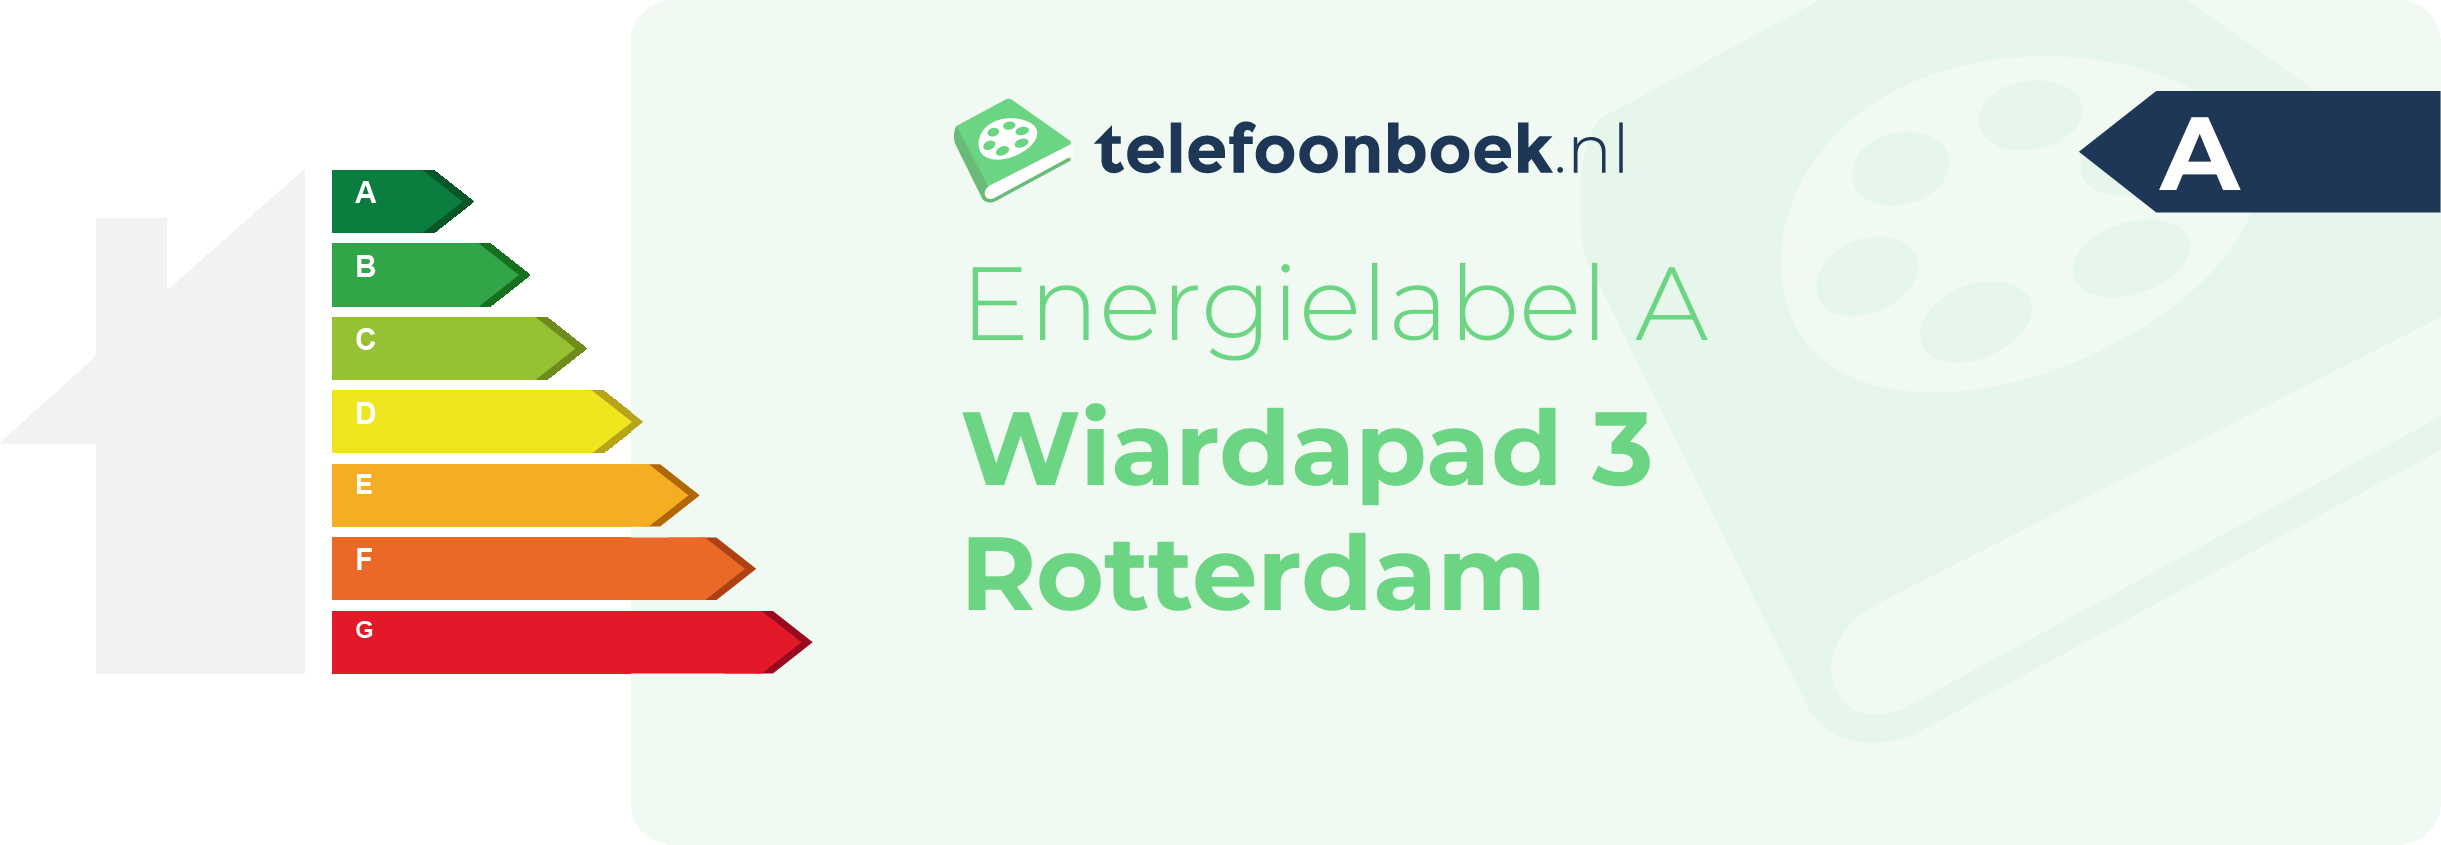 Energielabel Wiardapad 3 Rotterdam